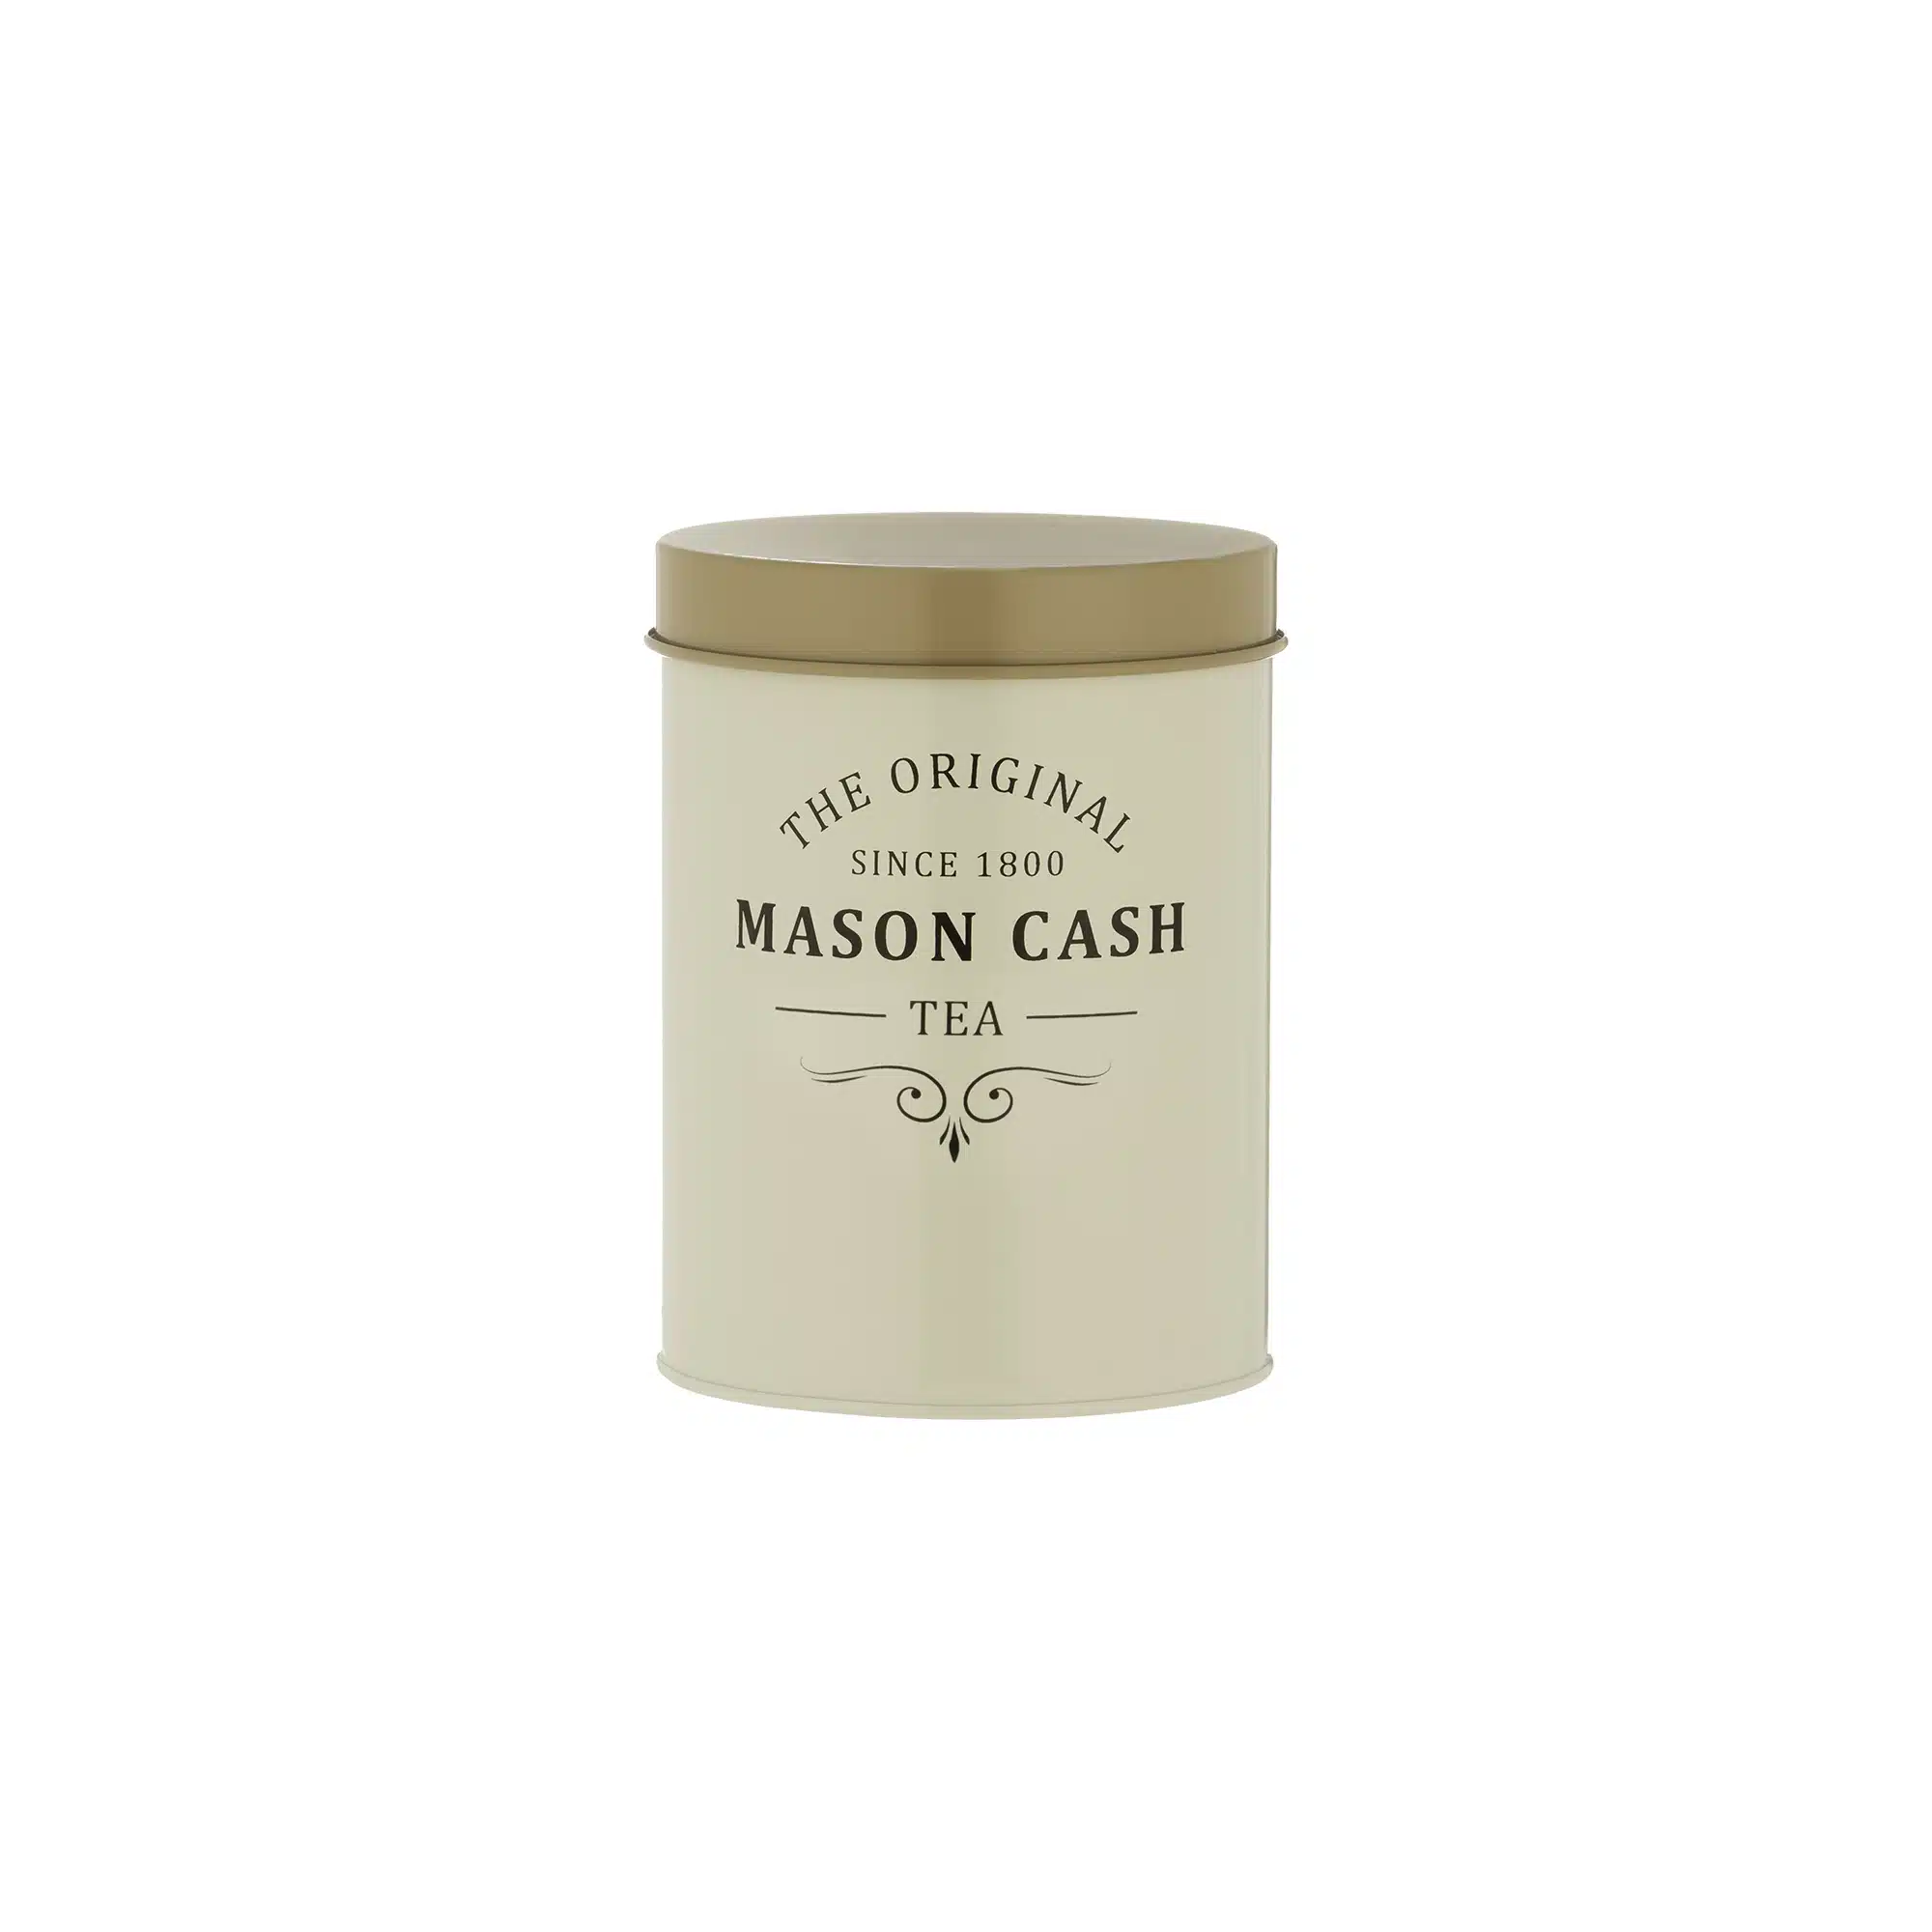 Mason Cash Heritage Tea Canister